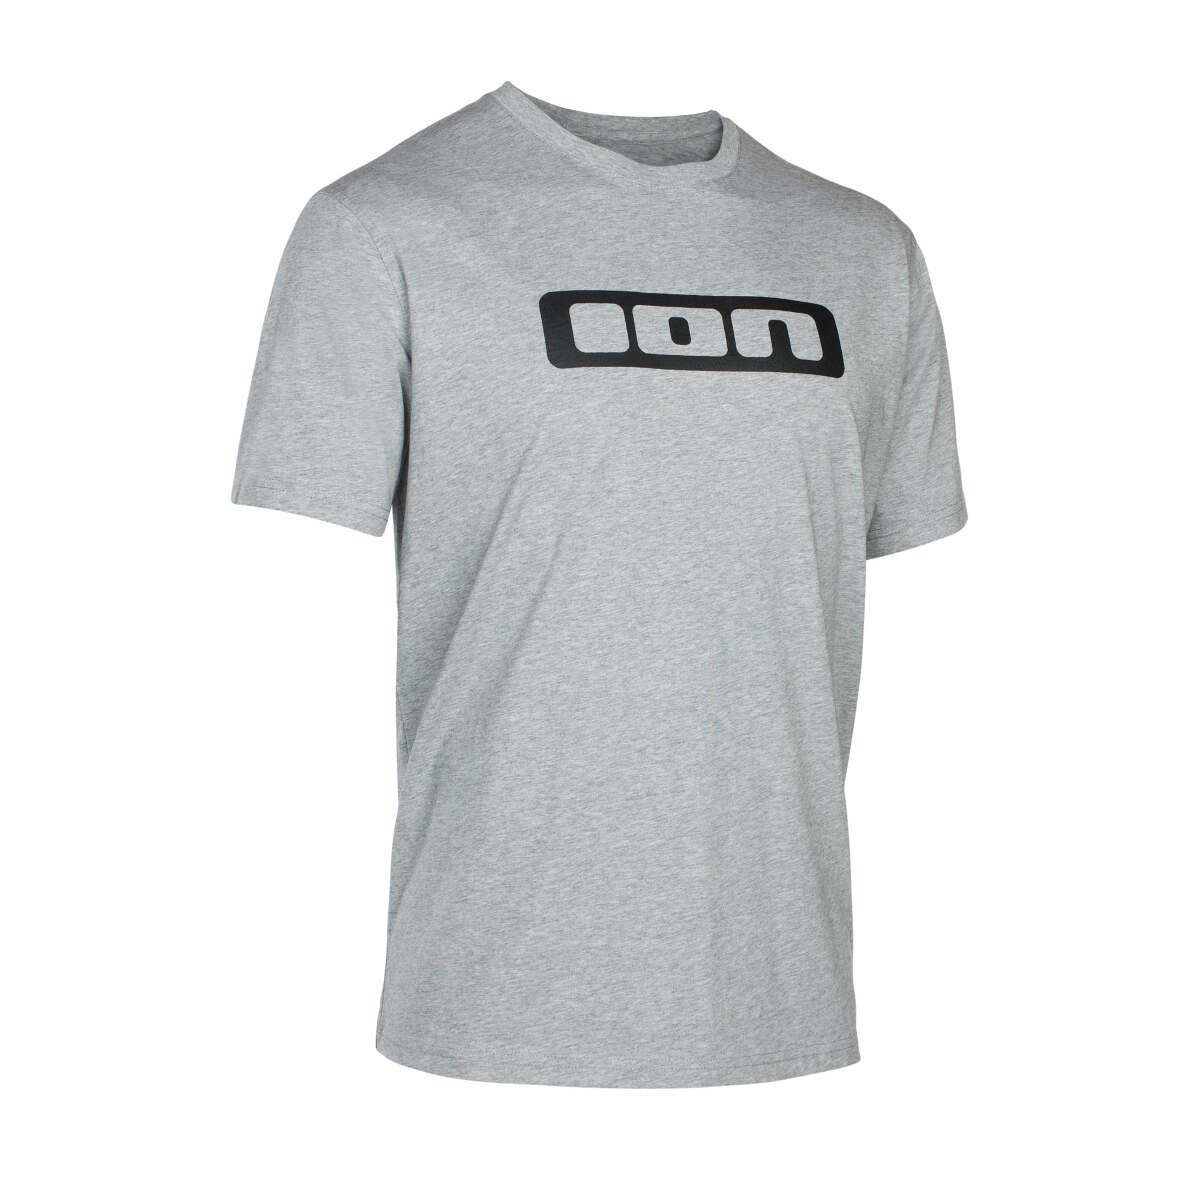 ION T-Shirt Logo Grau meliert